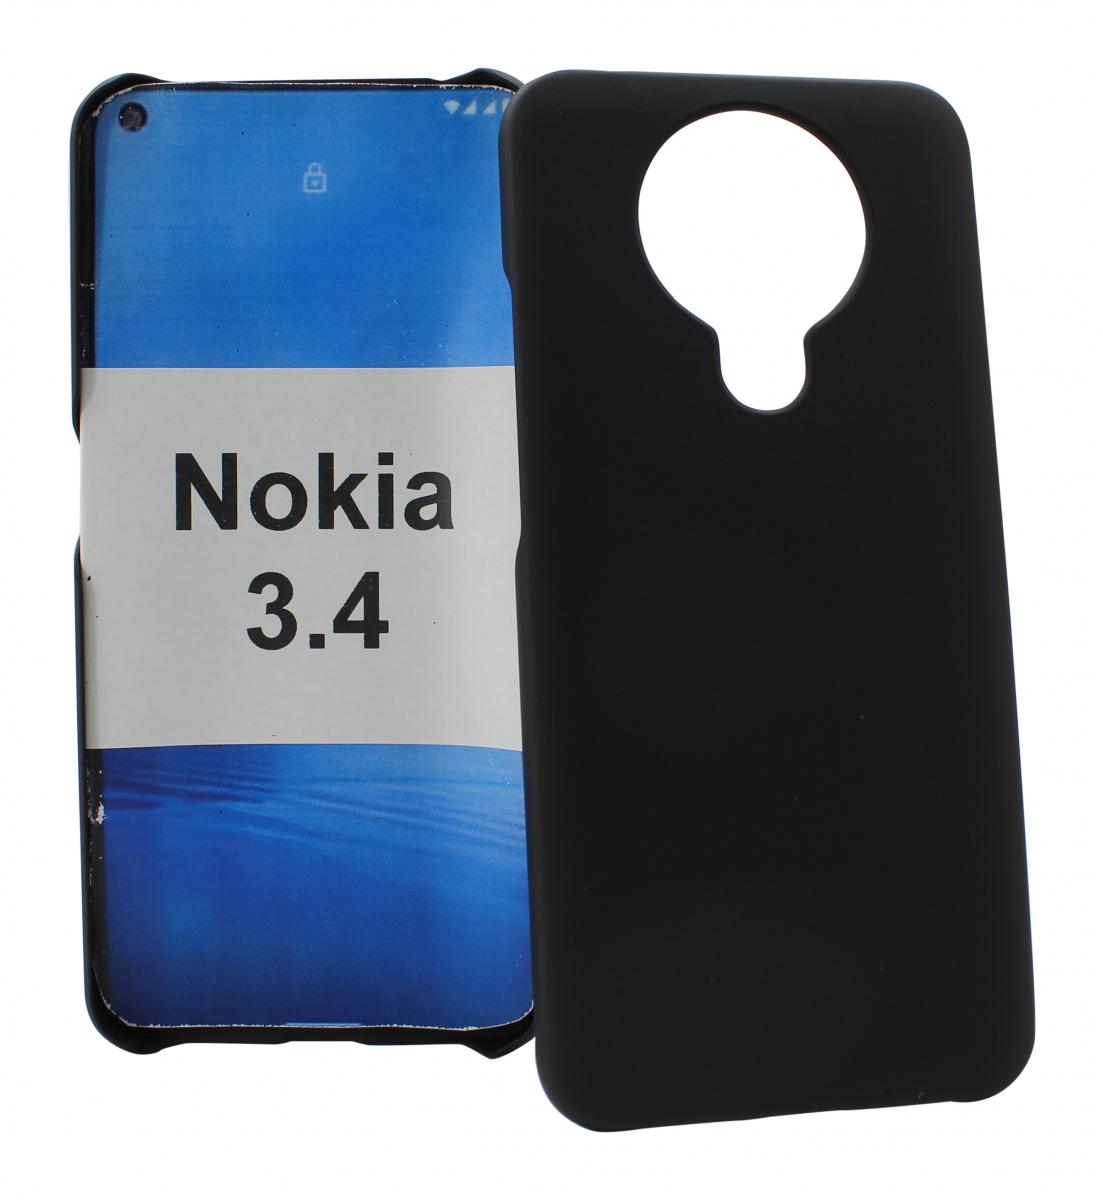 Hardcase Cover Nokia 3.4